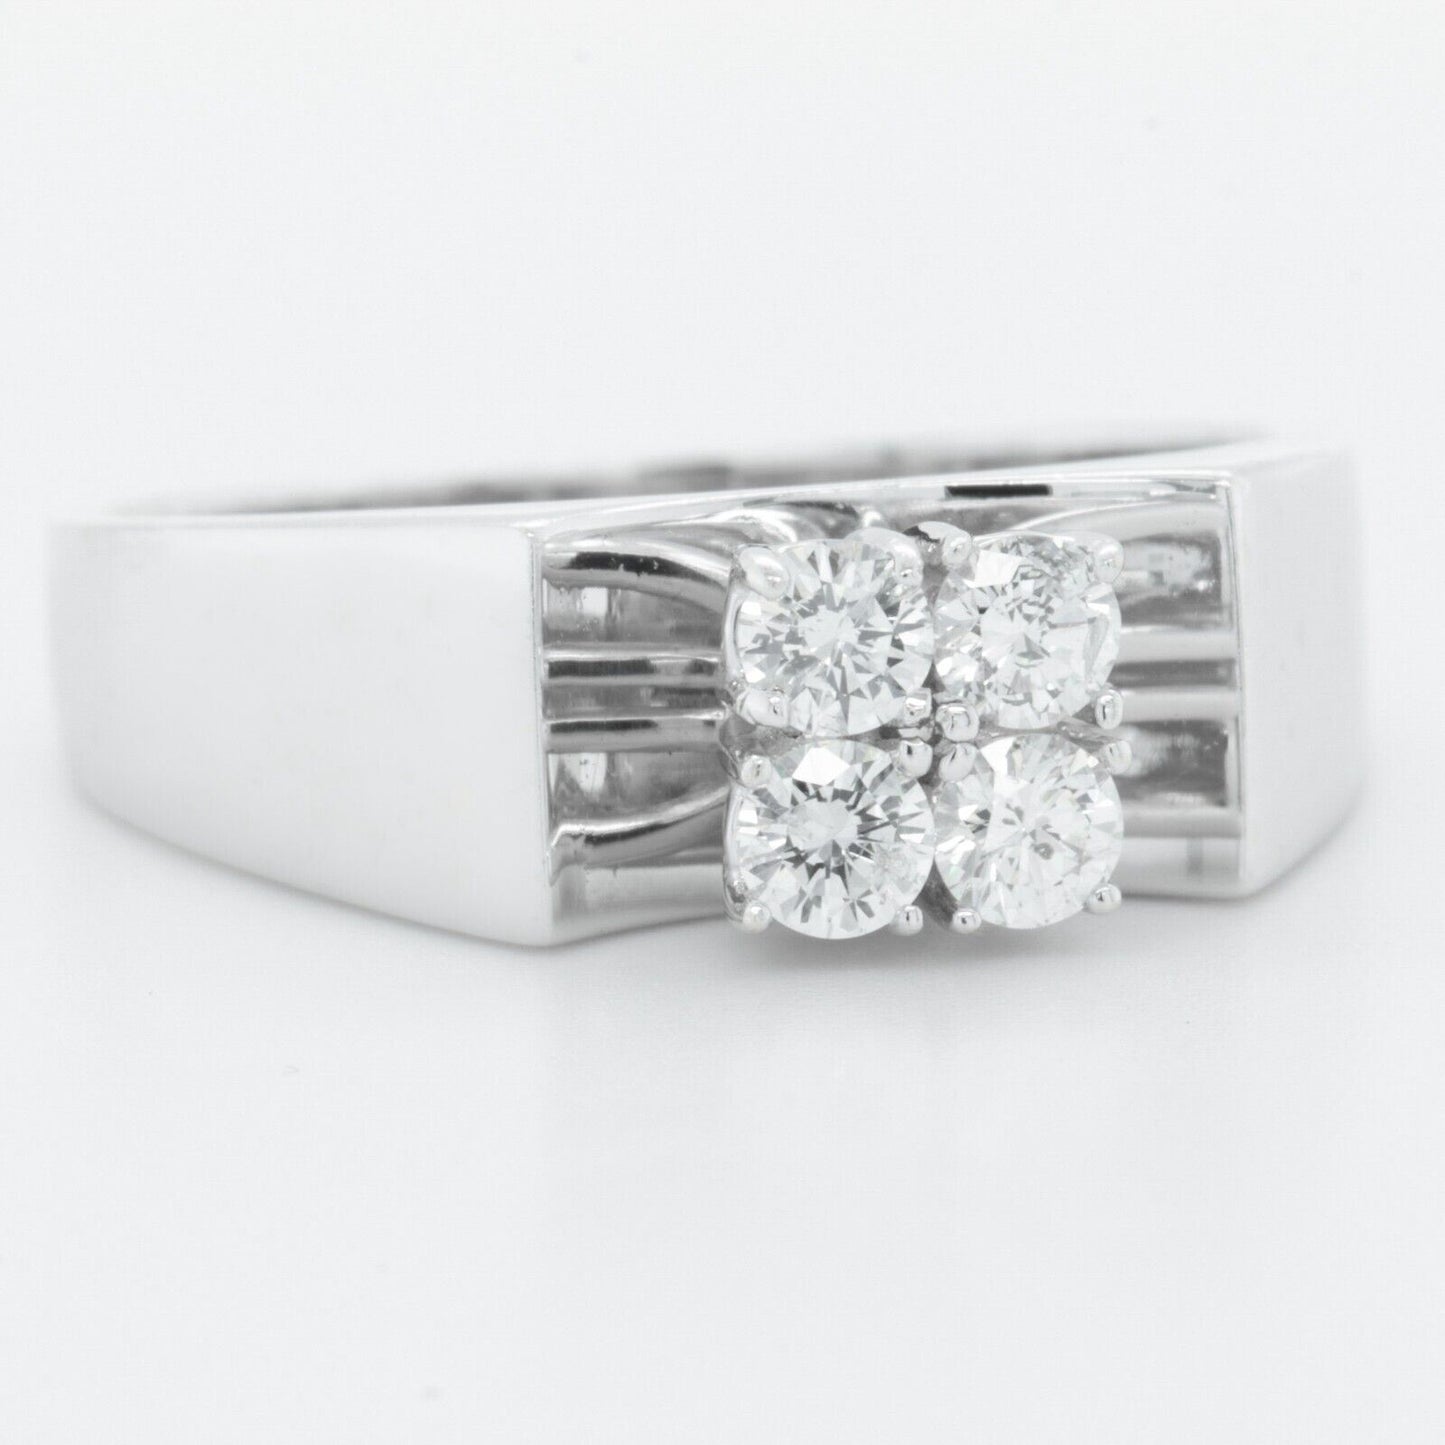 18k White Gold Diamond 4 Stone Band 0.35ctw G SI1-SI2 Ring Size 7.25 4.5g